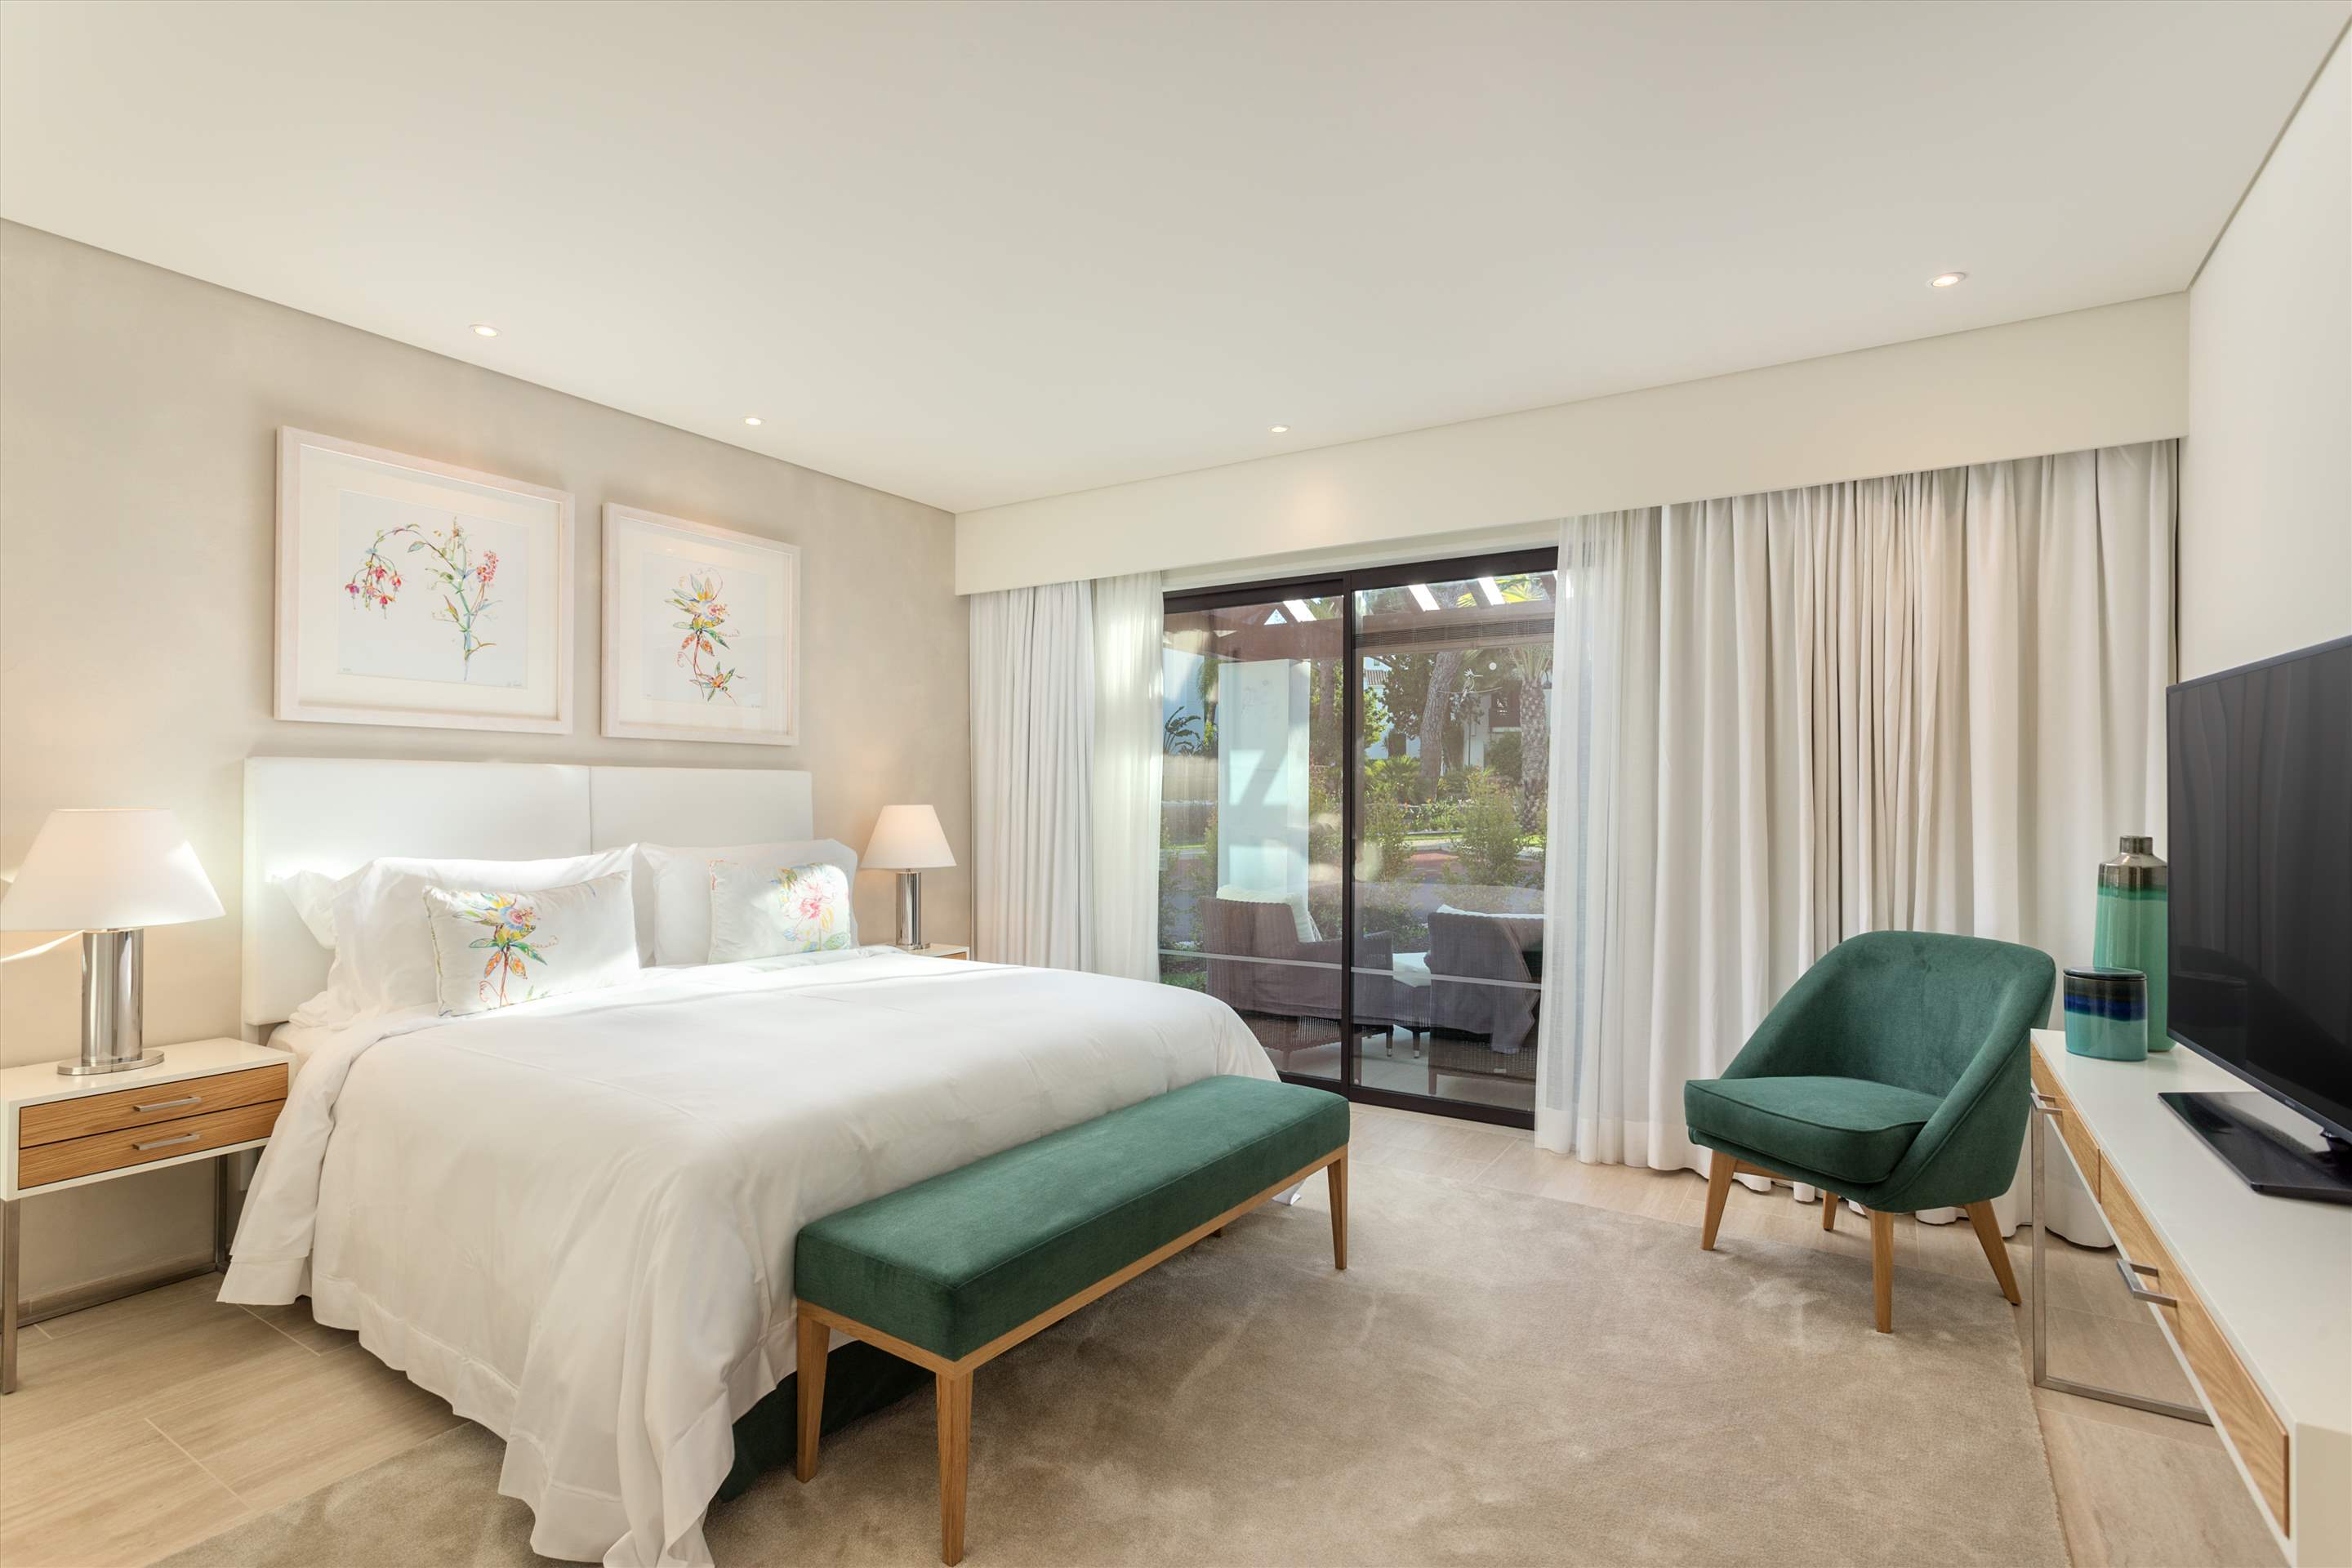 Pine Cliffs Gardens, One Bedroom Suite, S/C Basis, 1 bedroom apartment in Pine Cliffs Resort, Algarve Photo #20